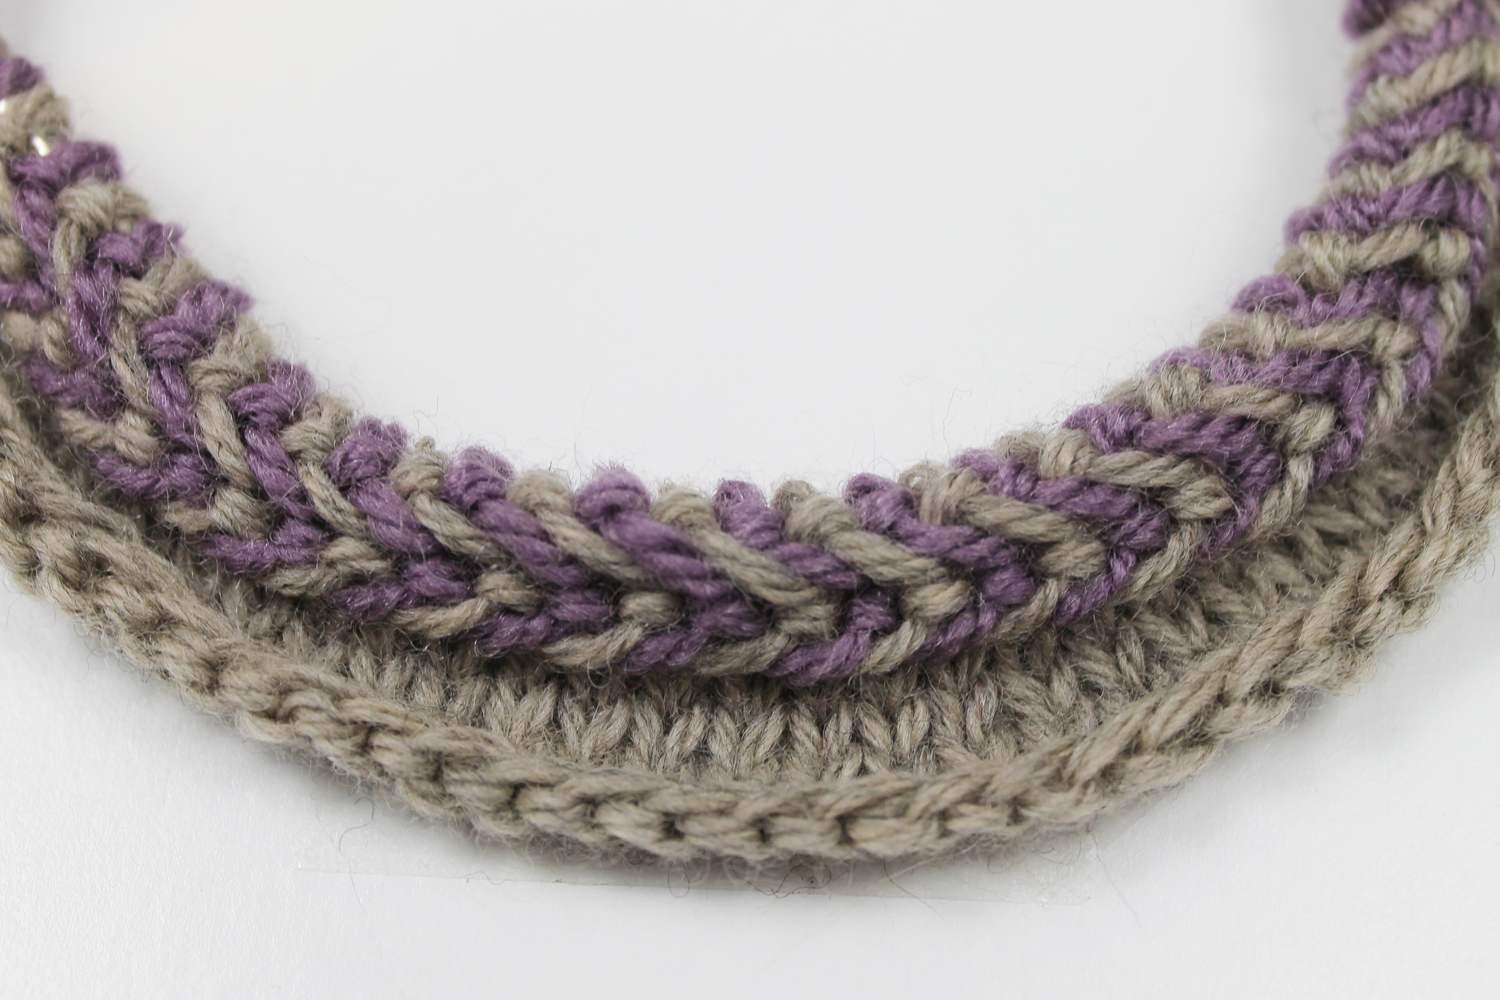 Knitting a Latvian braid